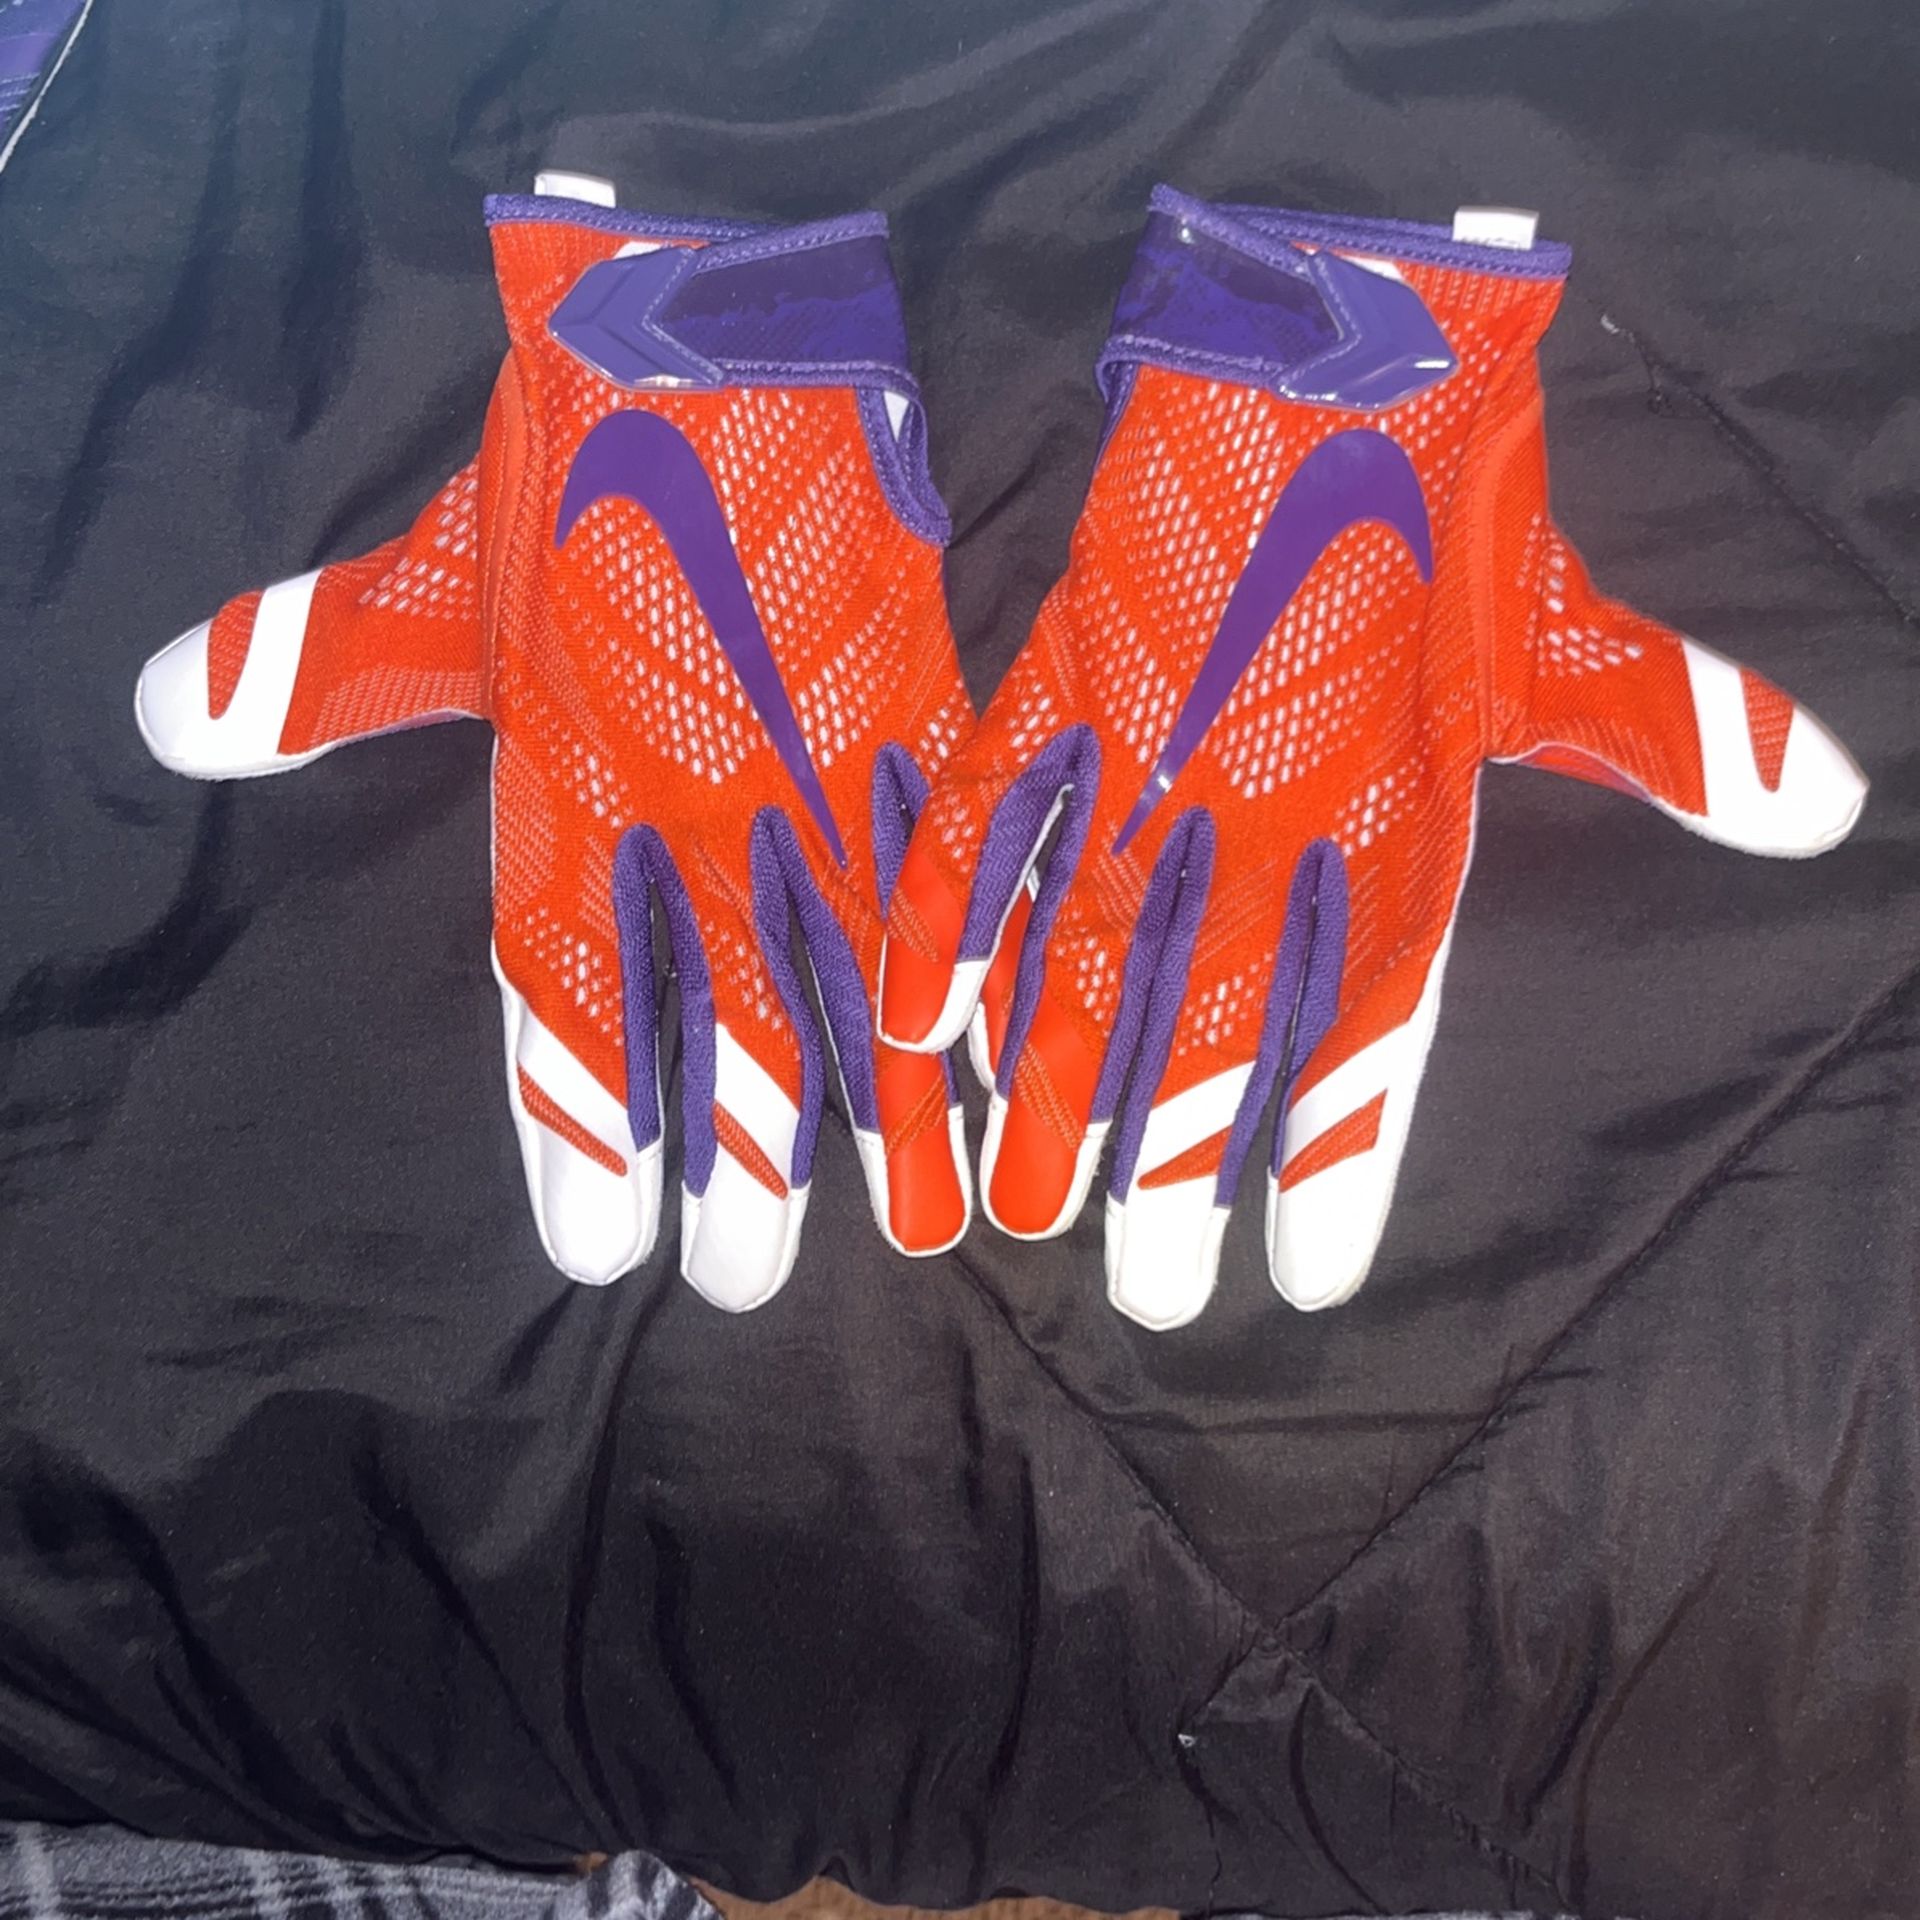 Clemson football gloves for Sale in Miami, FL - OfferUp